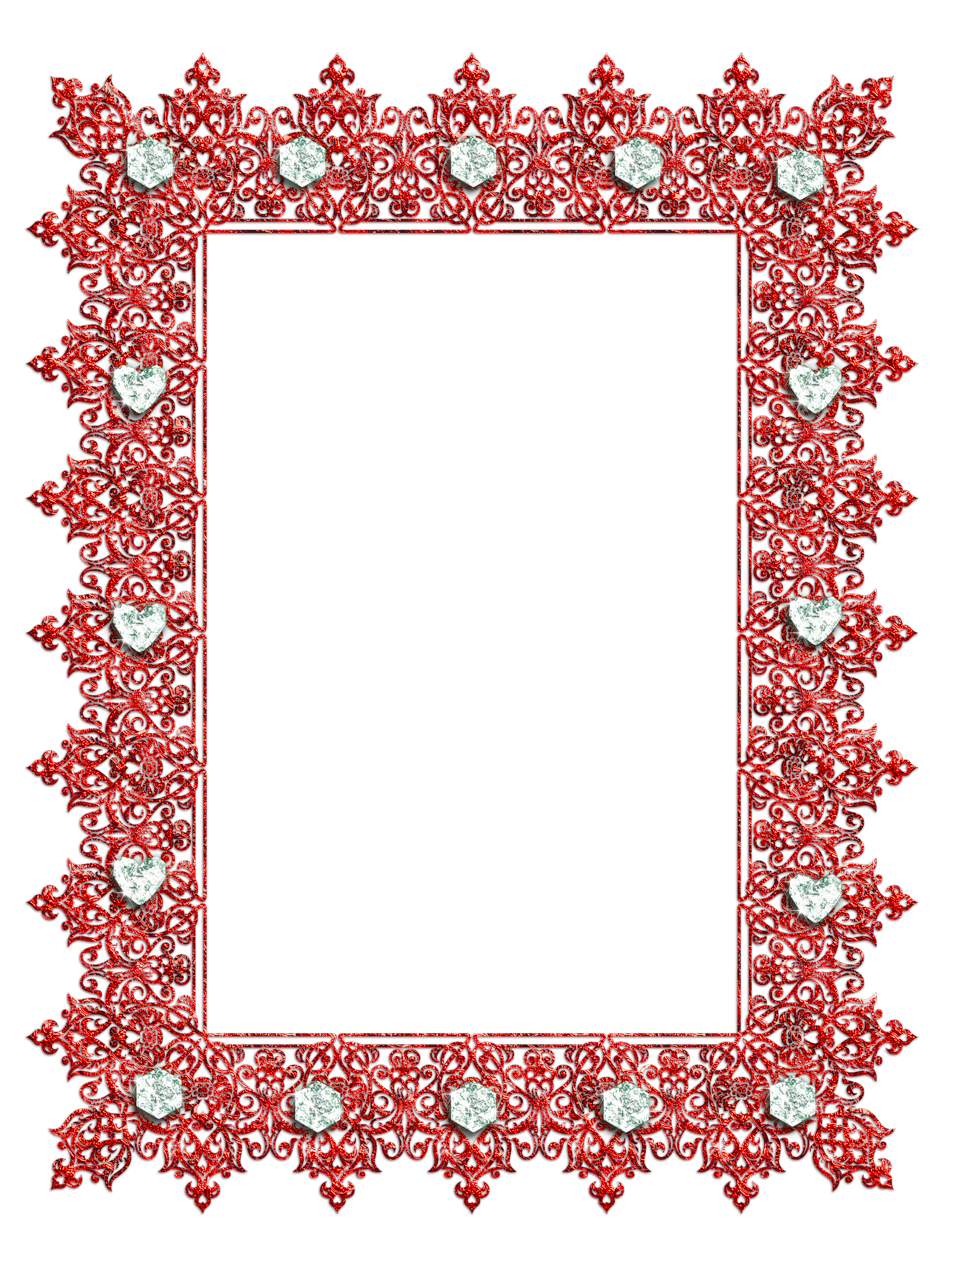 Clipart diamond round diamond. Red transparent frame with